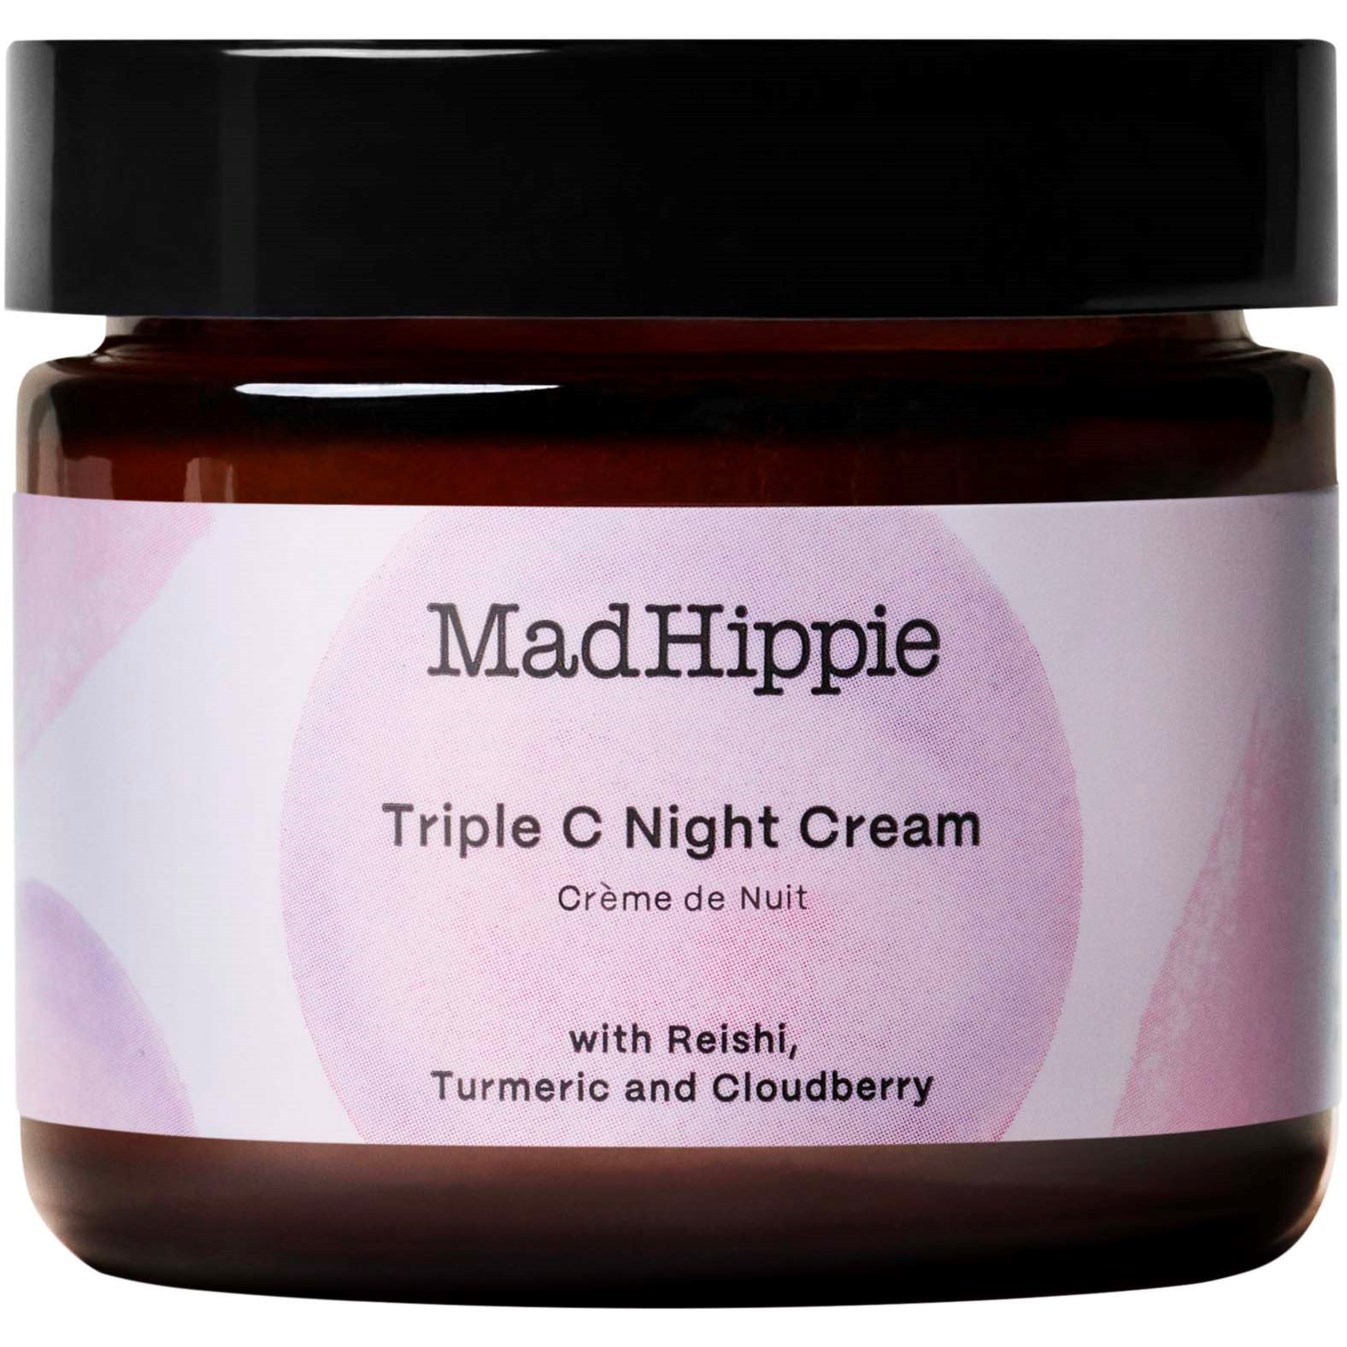 Läs mer om Mad Hippie Triple C Night Cream